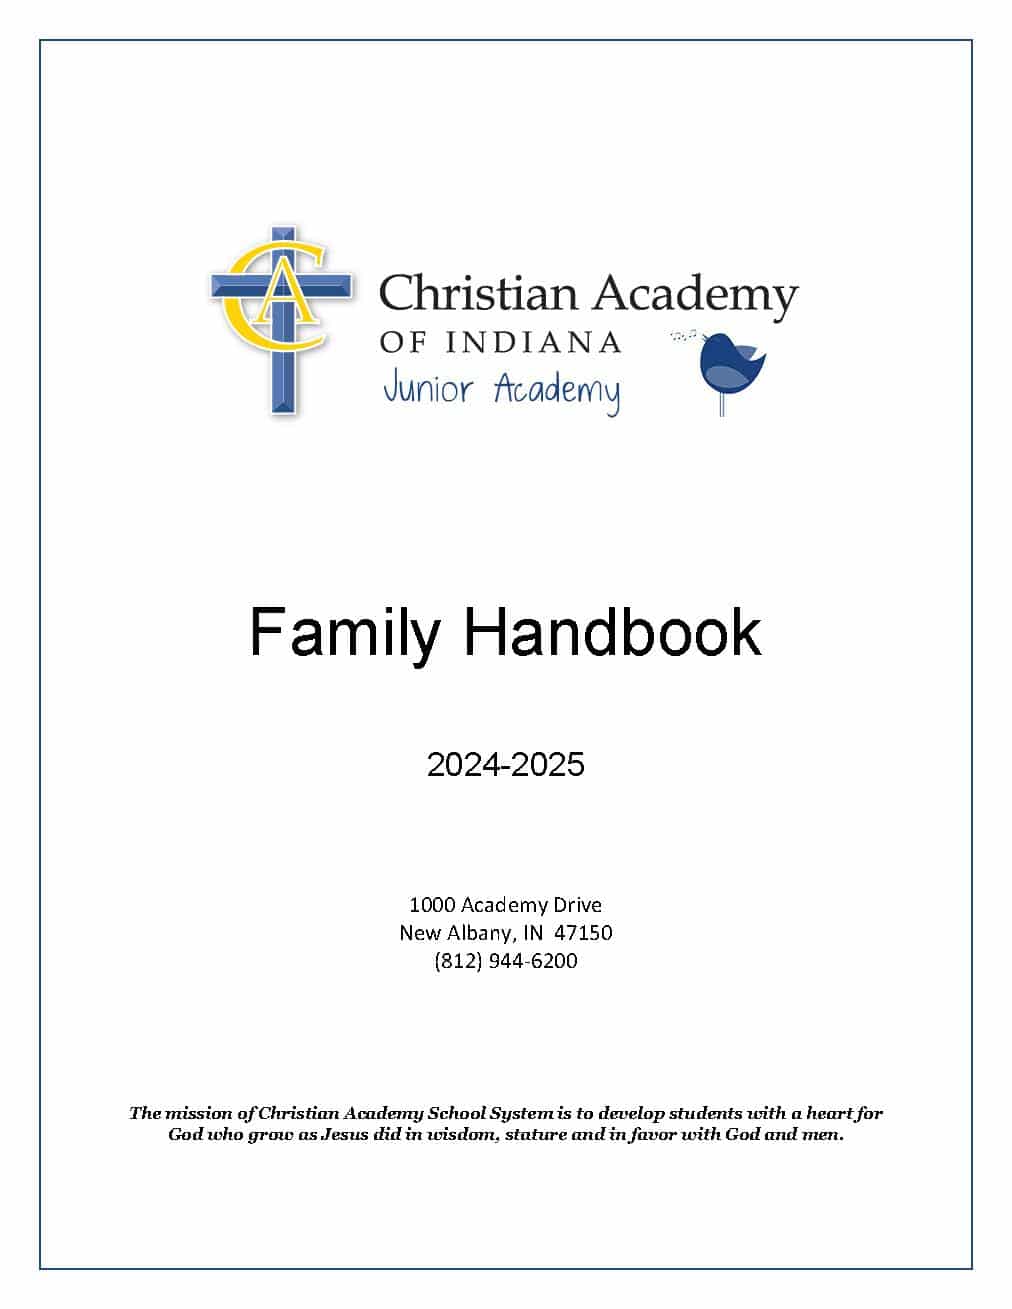 Christian Academy School System | Christian Academy of Indiana | Junior Academy | 2024-2025 Handbook